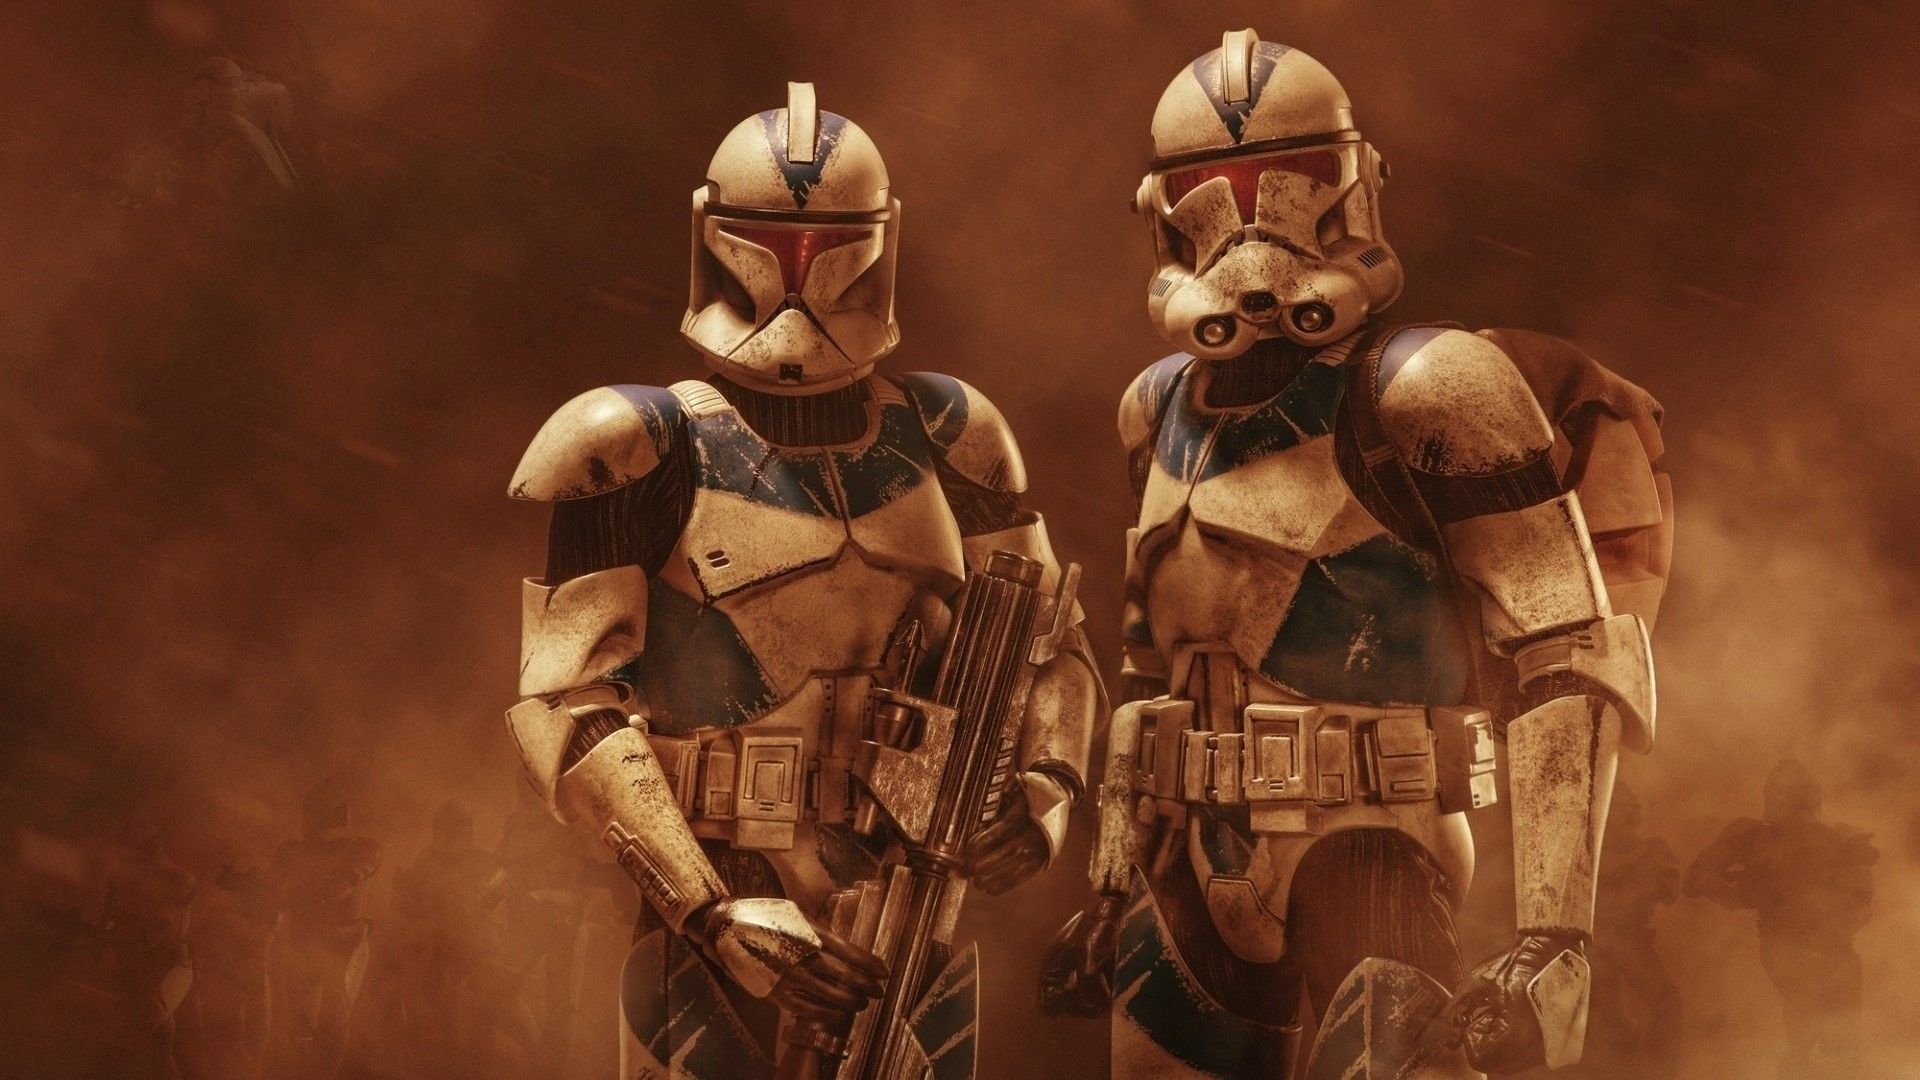 clone trooper armor phase 2